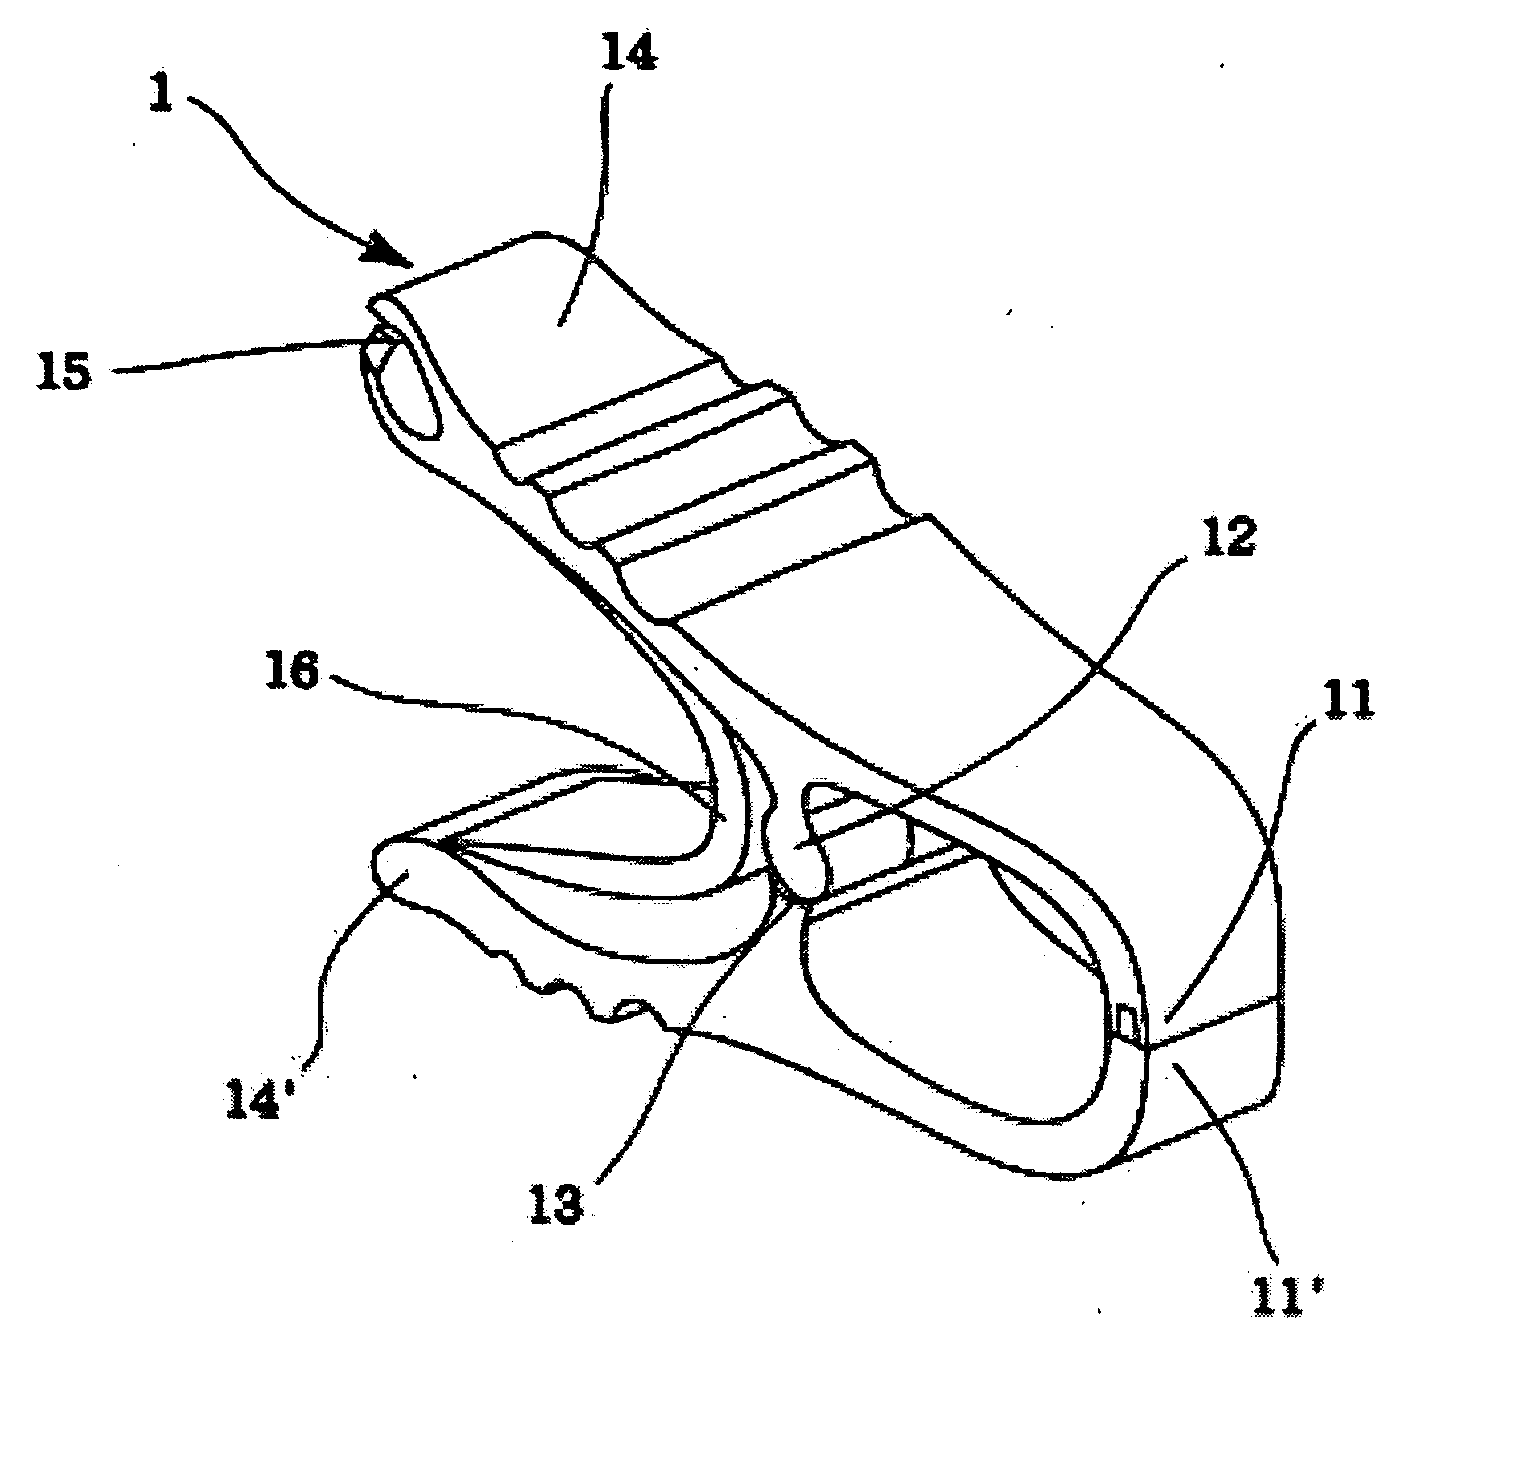 One-piece elastic clamp device